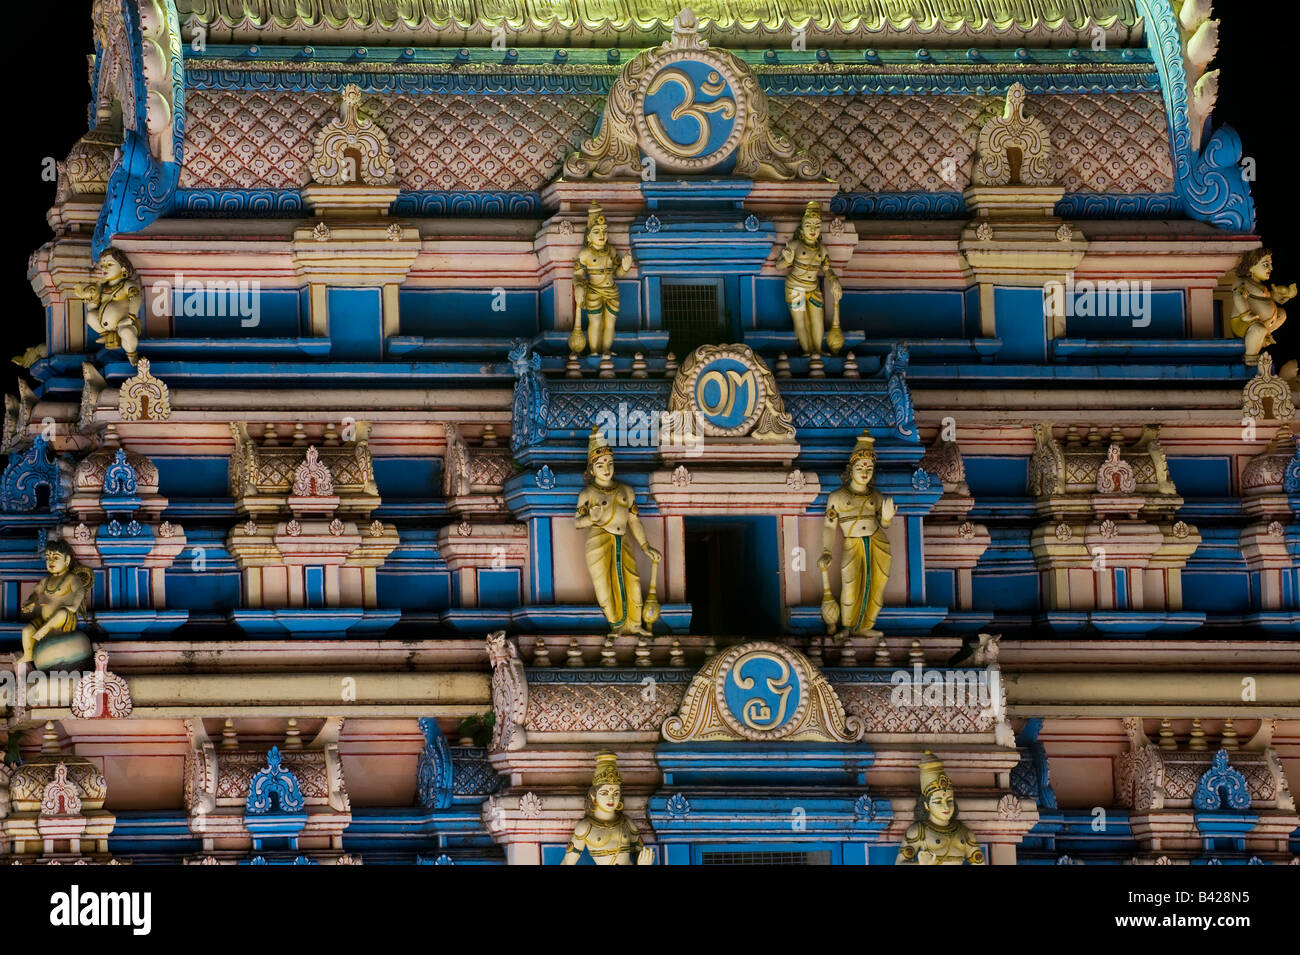 Indian gopuram ashram temple architecture at night in the South Indian town of Puttaparthi. Andhra Pradesh, India Stock Photo